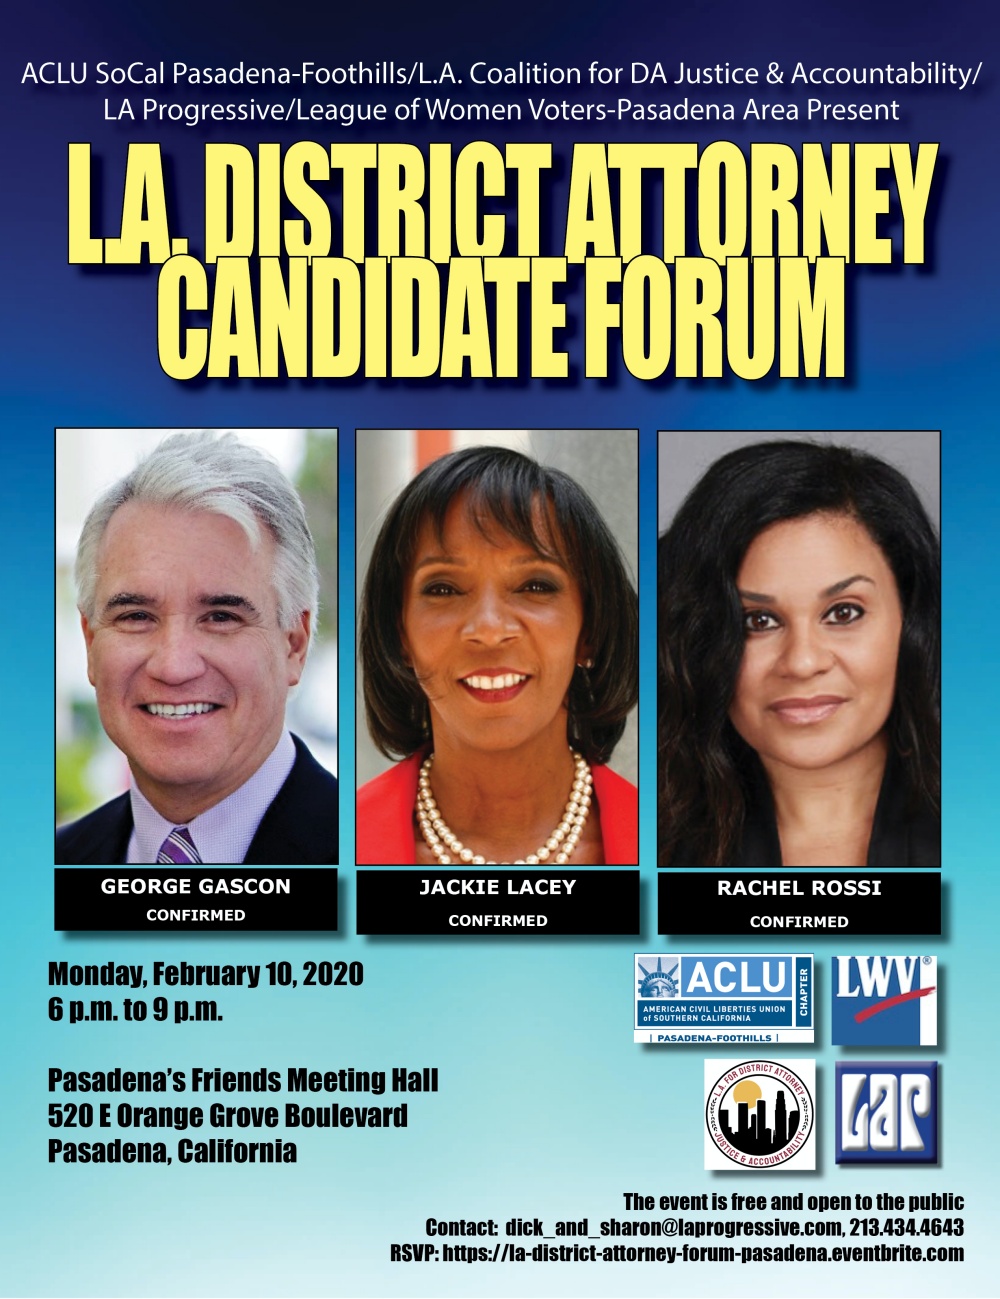 LA District Attorney Candidate Forum